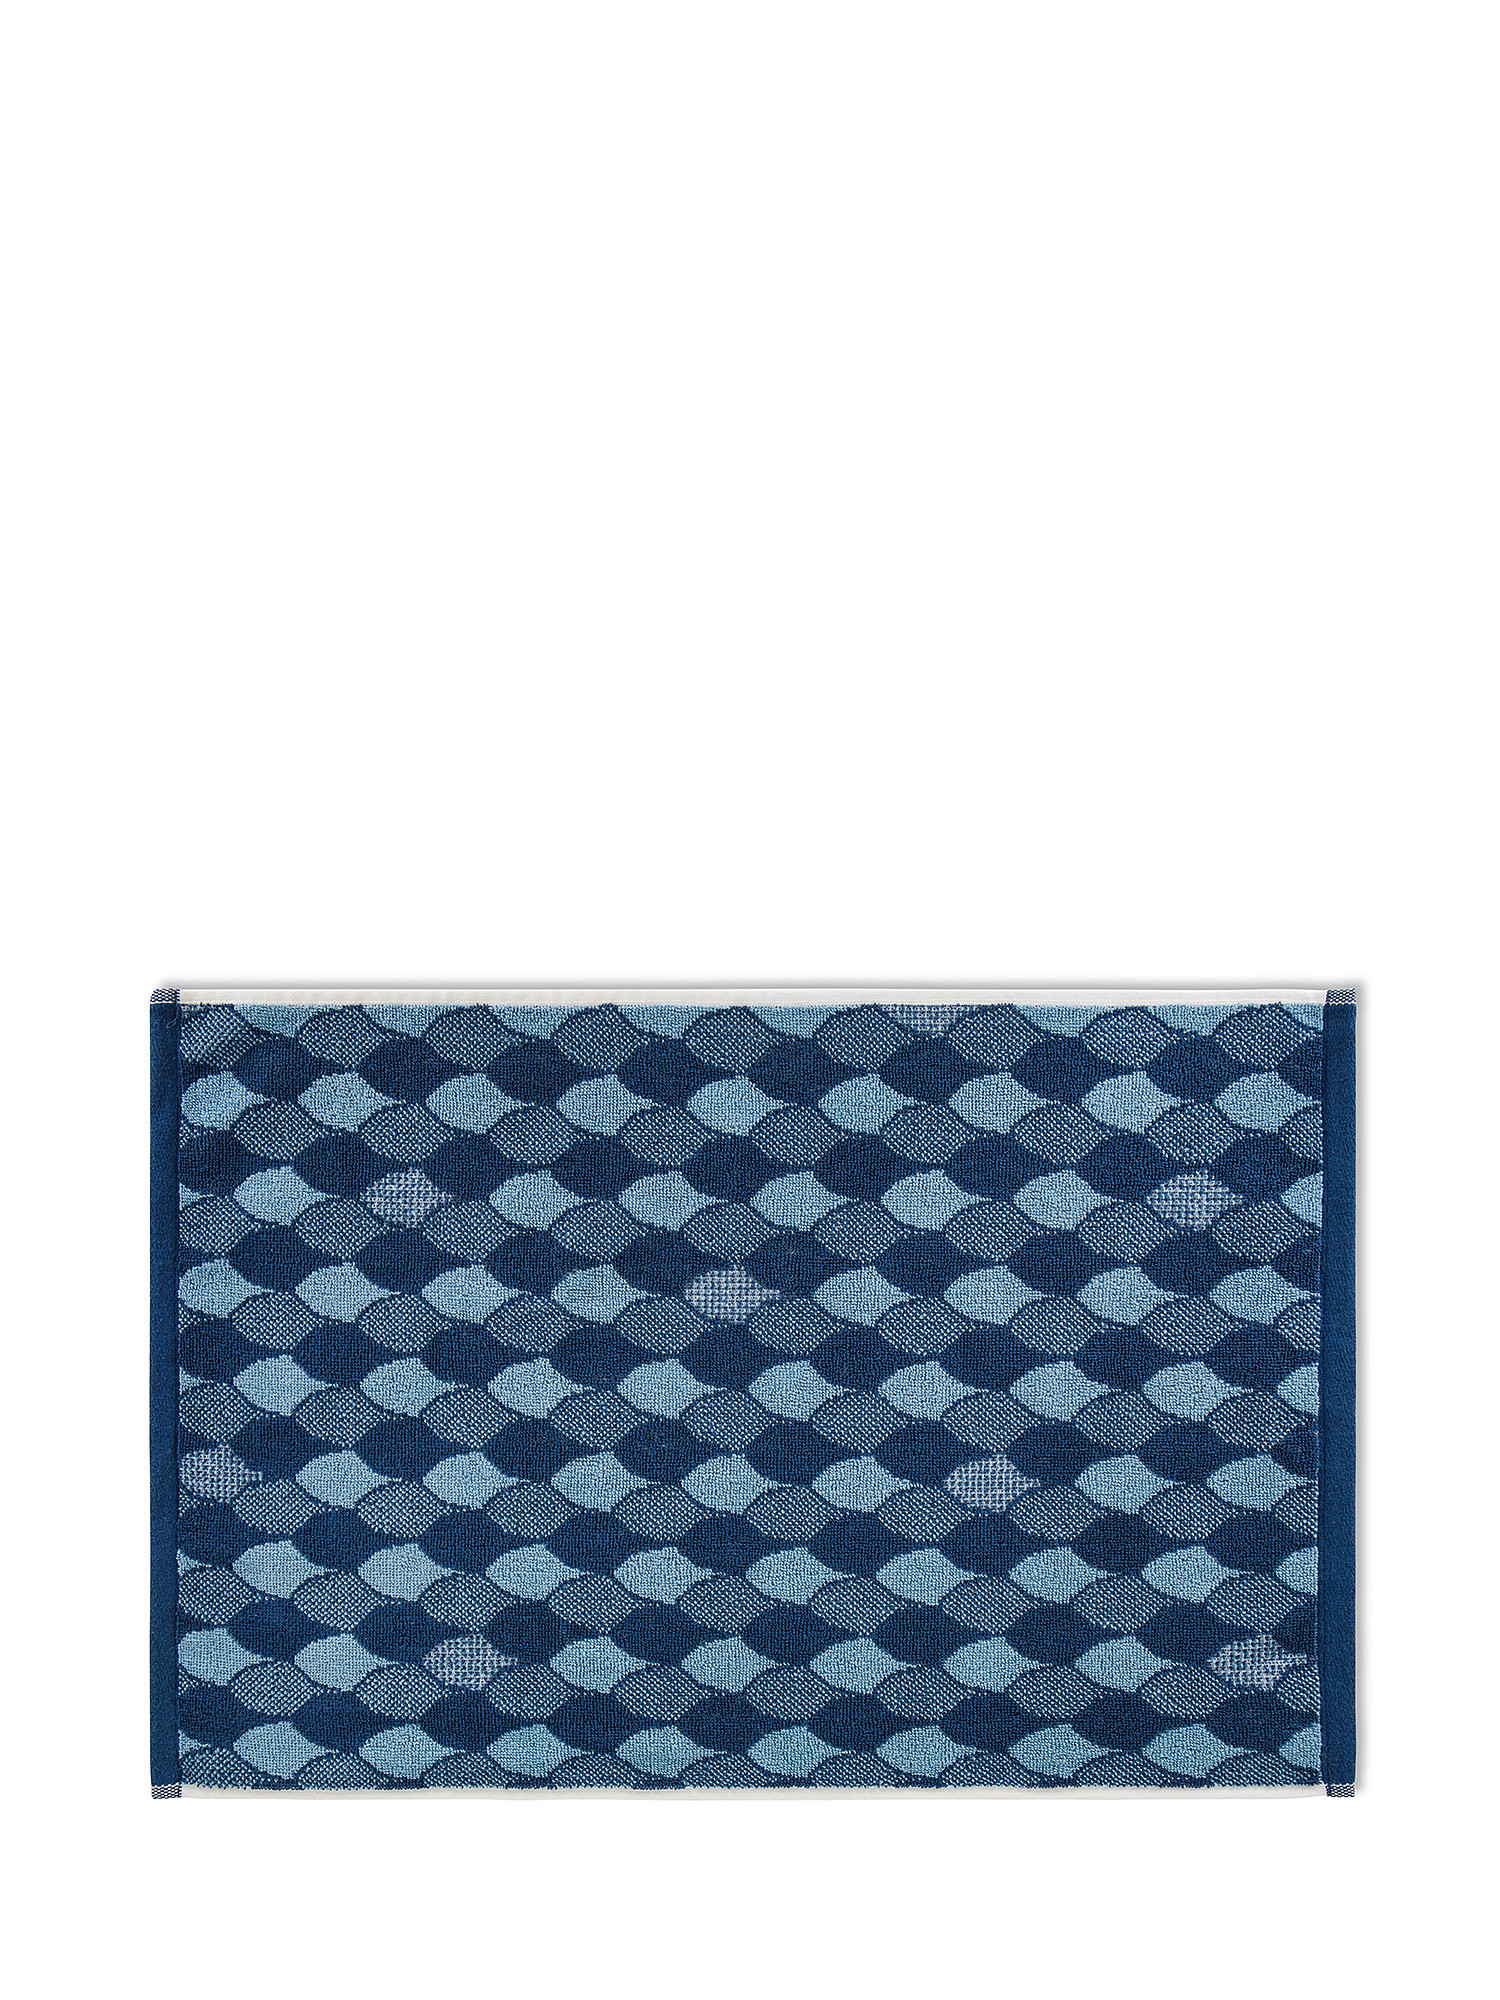 Asciugamano spugna di cotone motivo squame, Blu, large image number 1